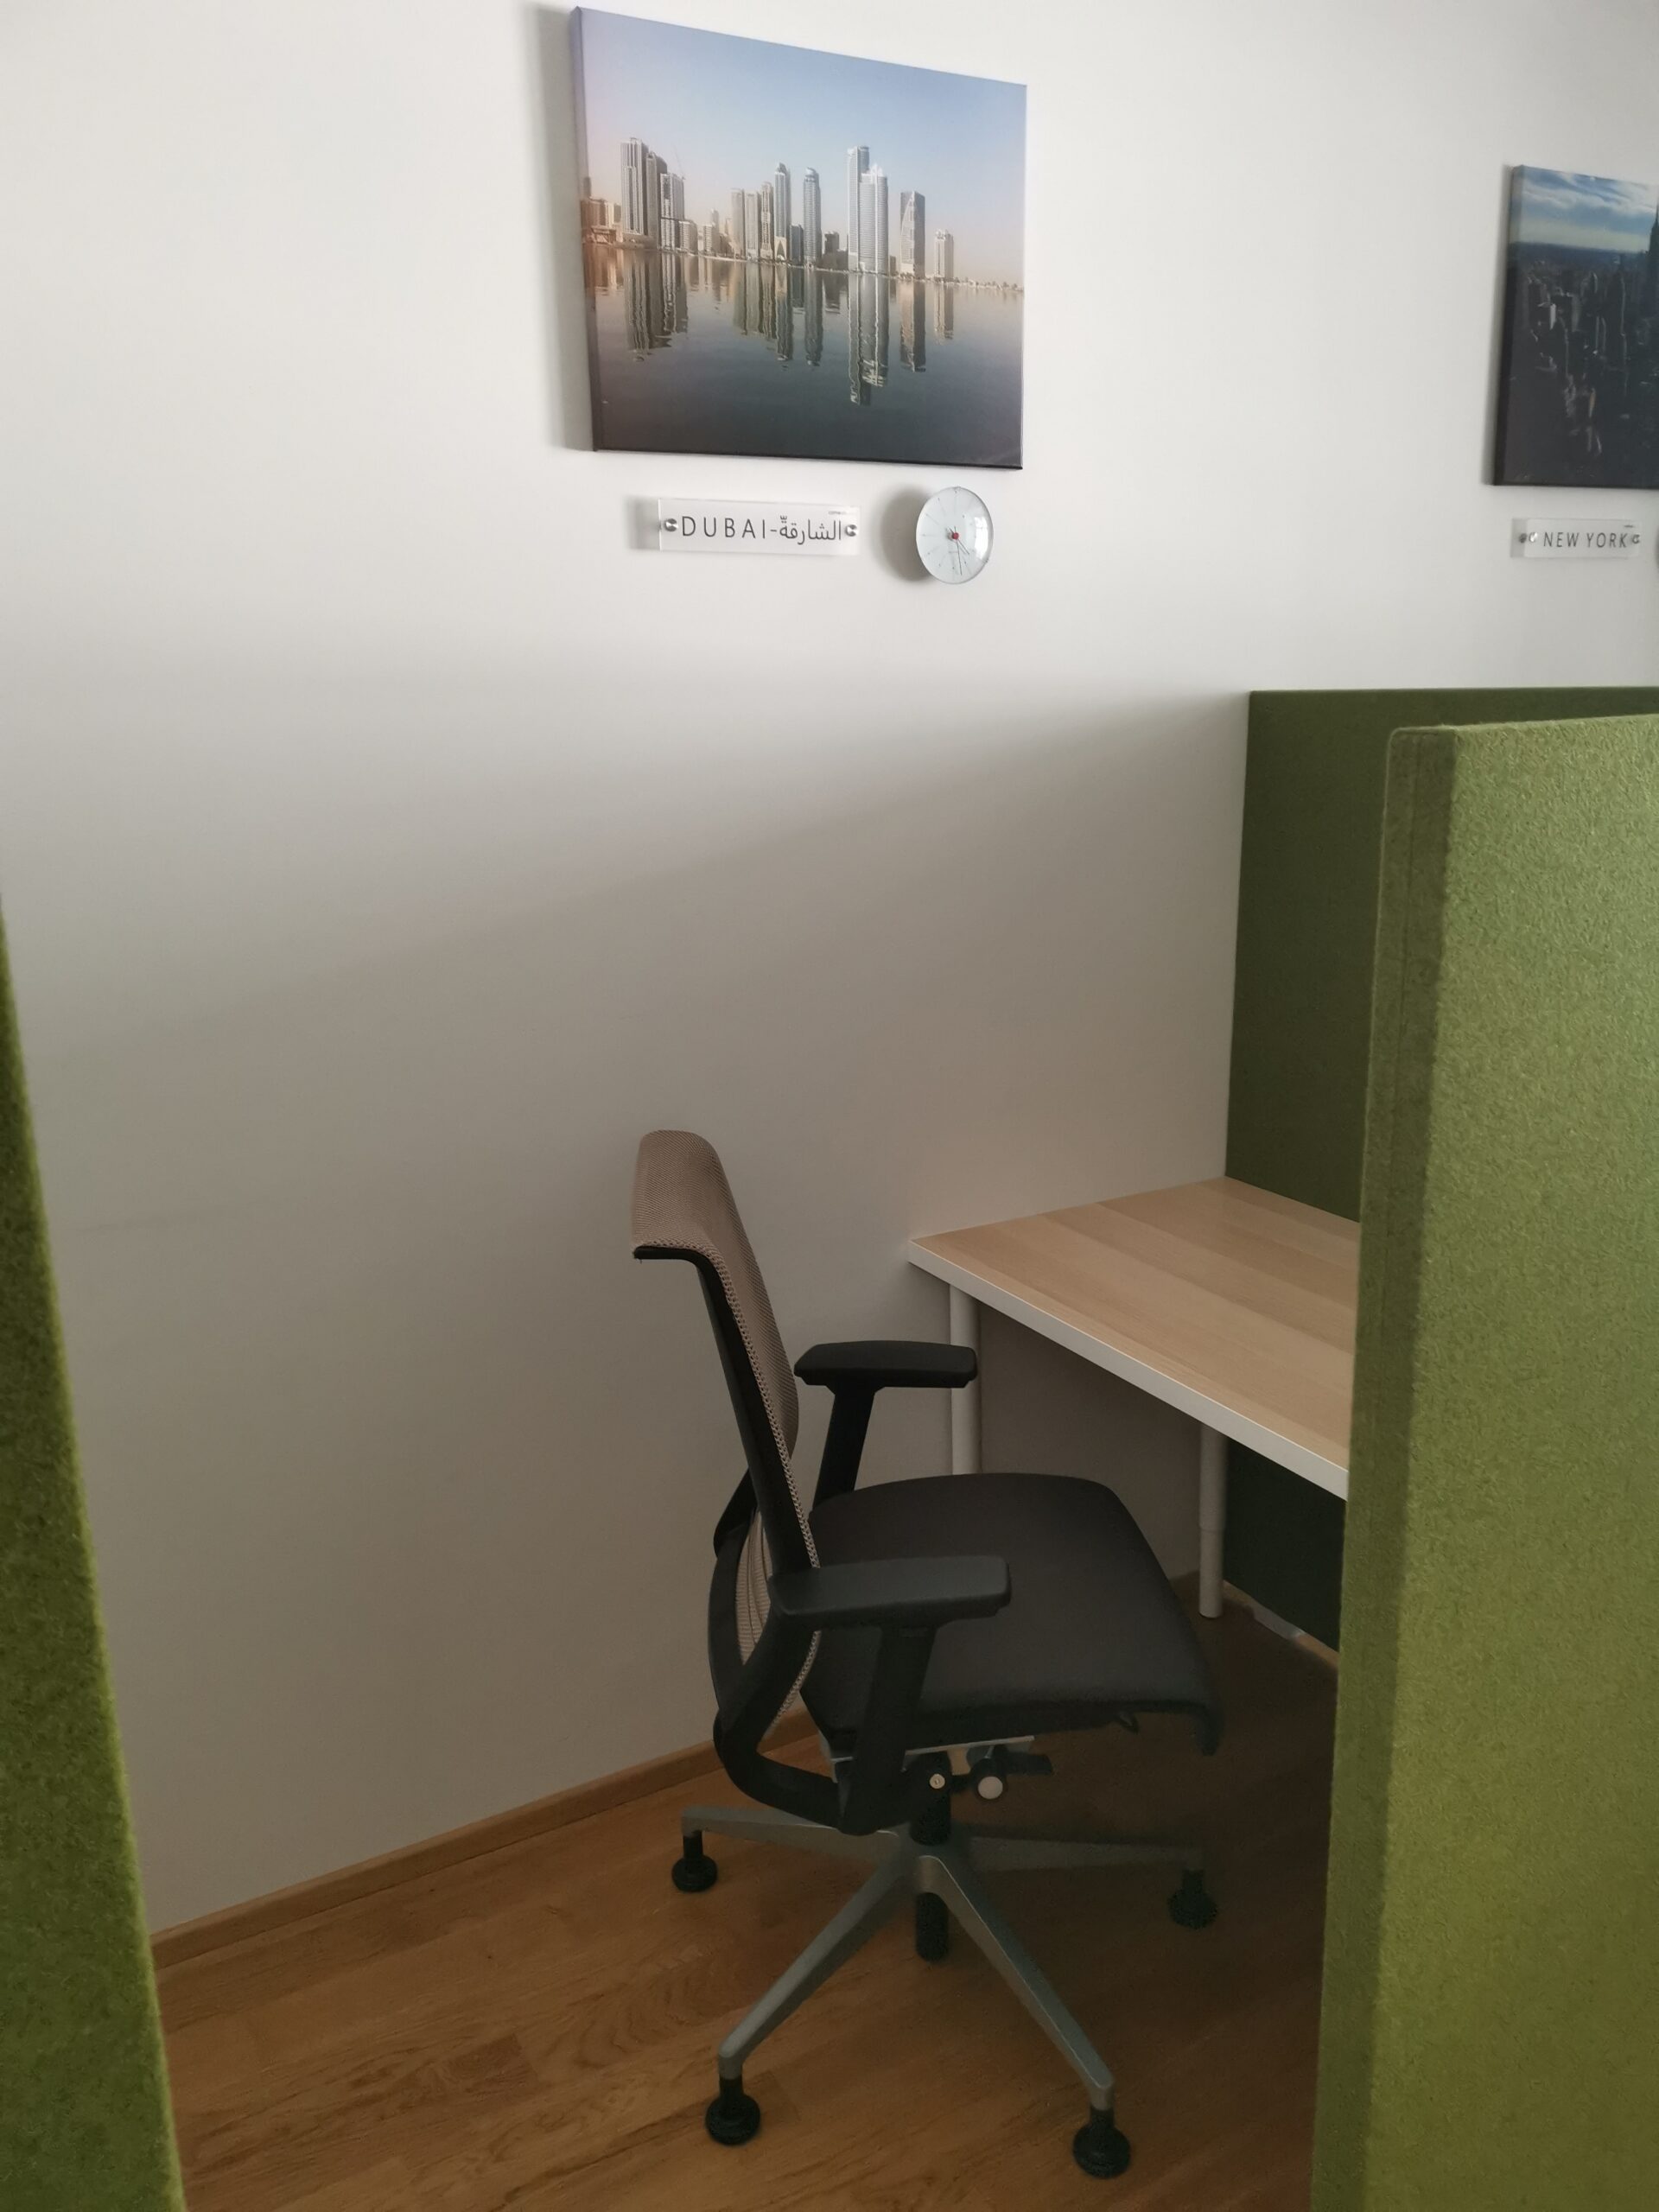 Dubai Desk - Fixdesk in Workspace